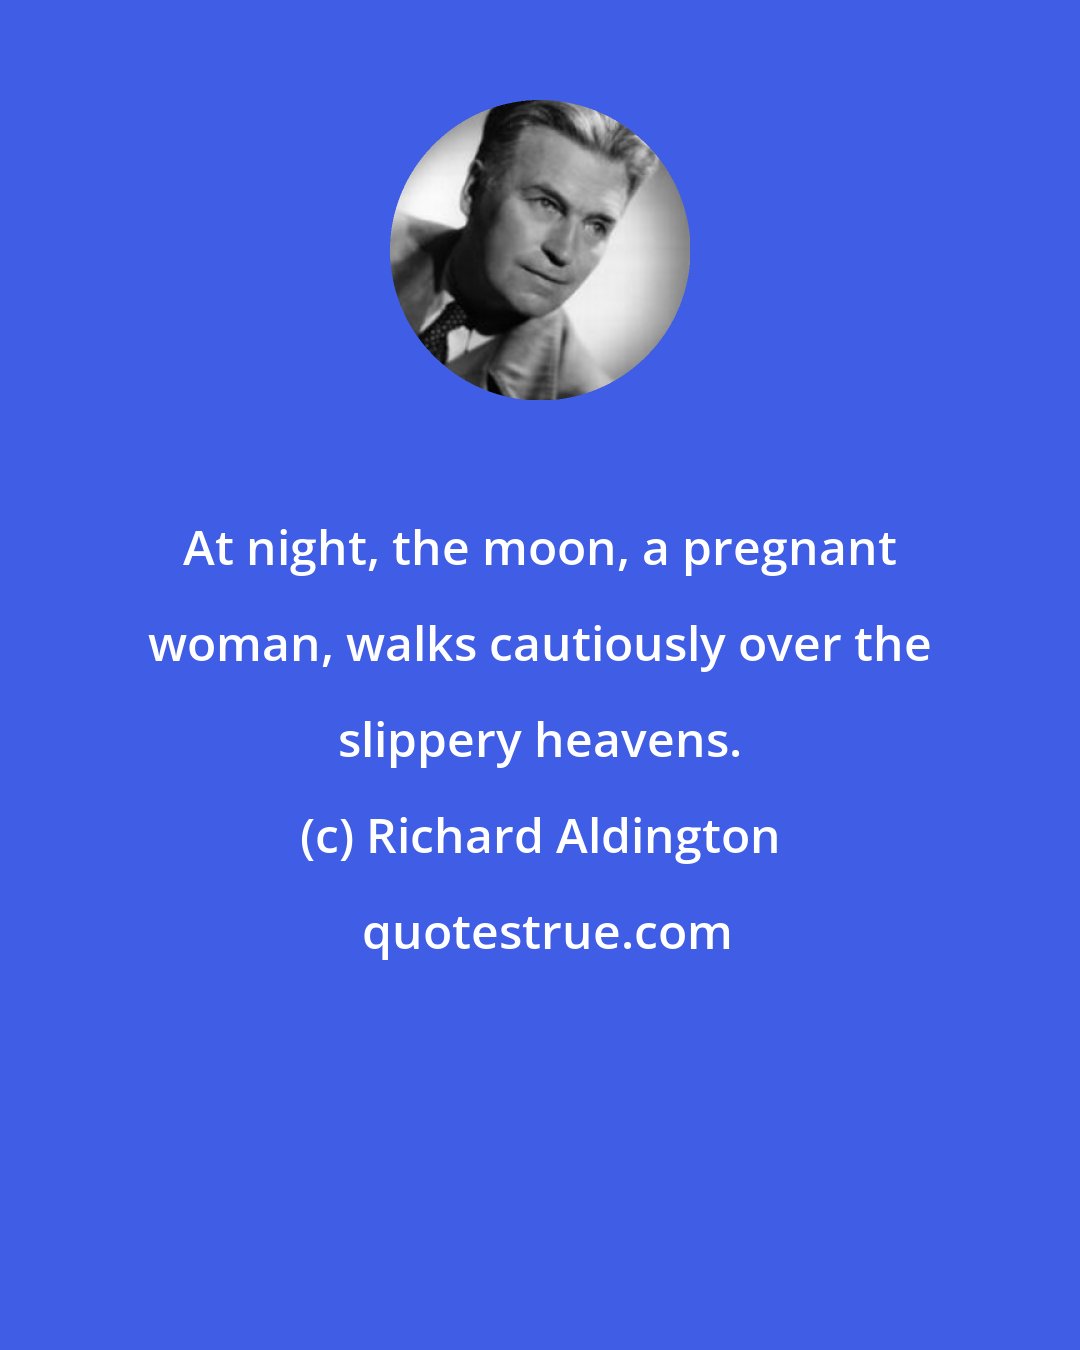 Richard Aldington: At night, the moon, a pregnant woman, walks cautiously over the slippery heavens.